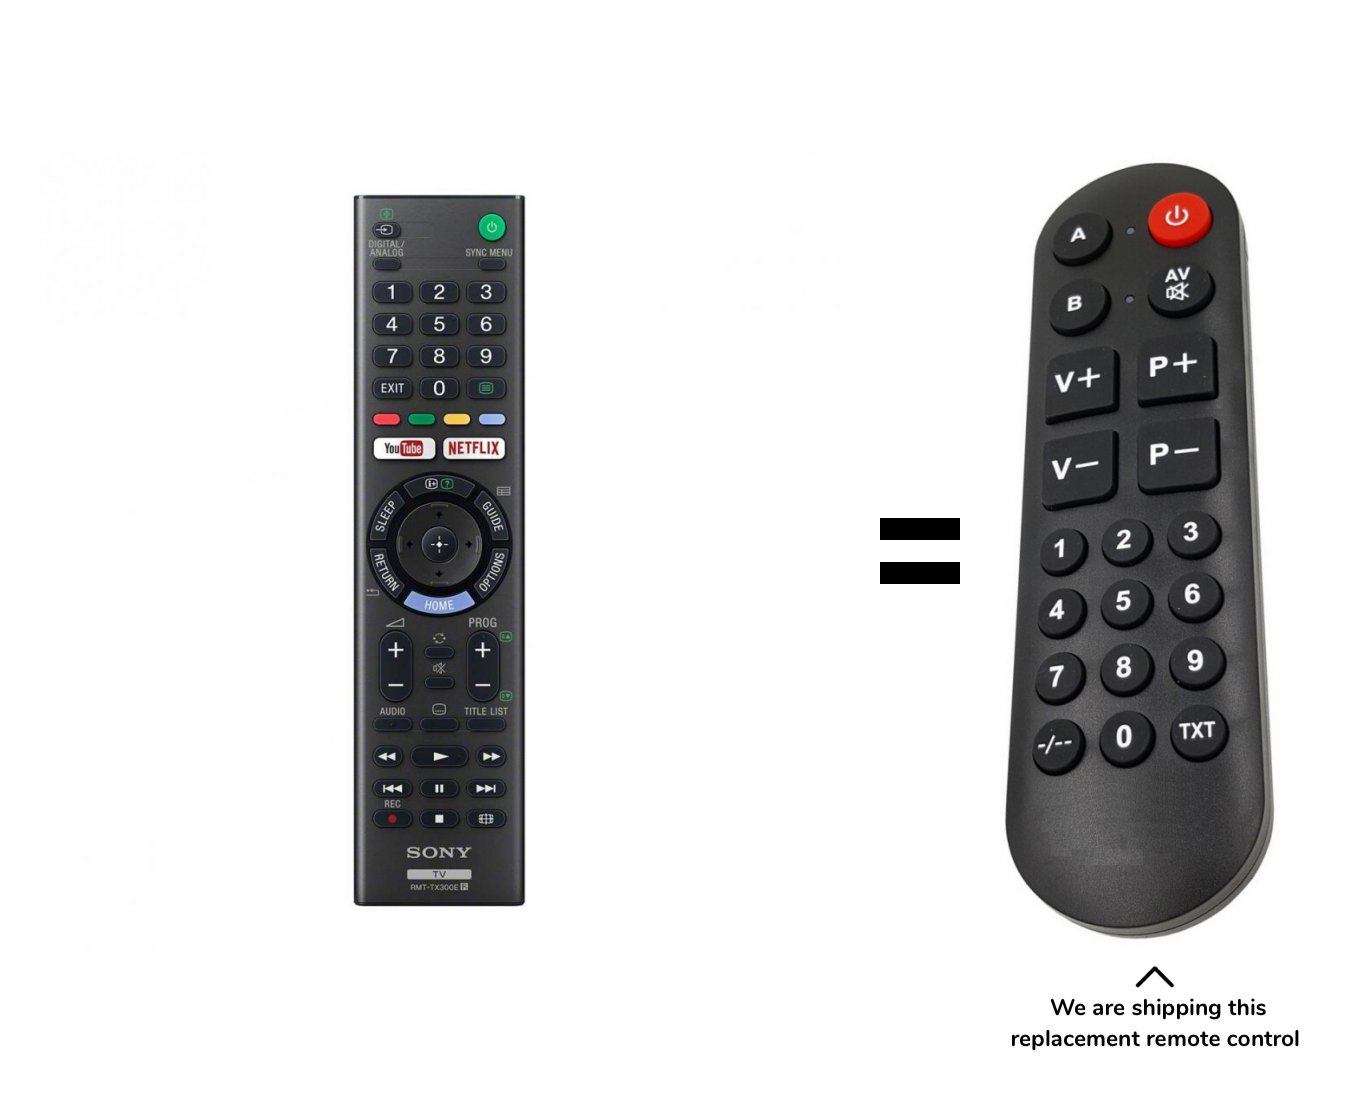 Sony RMT-TX300E remote control for seniors